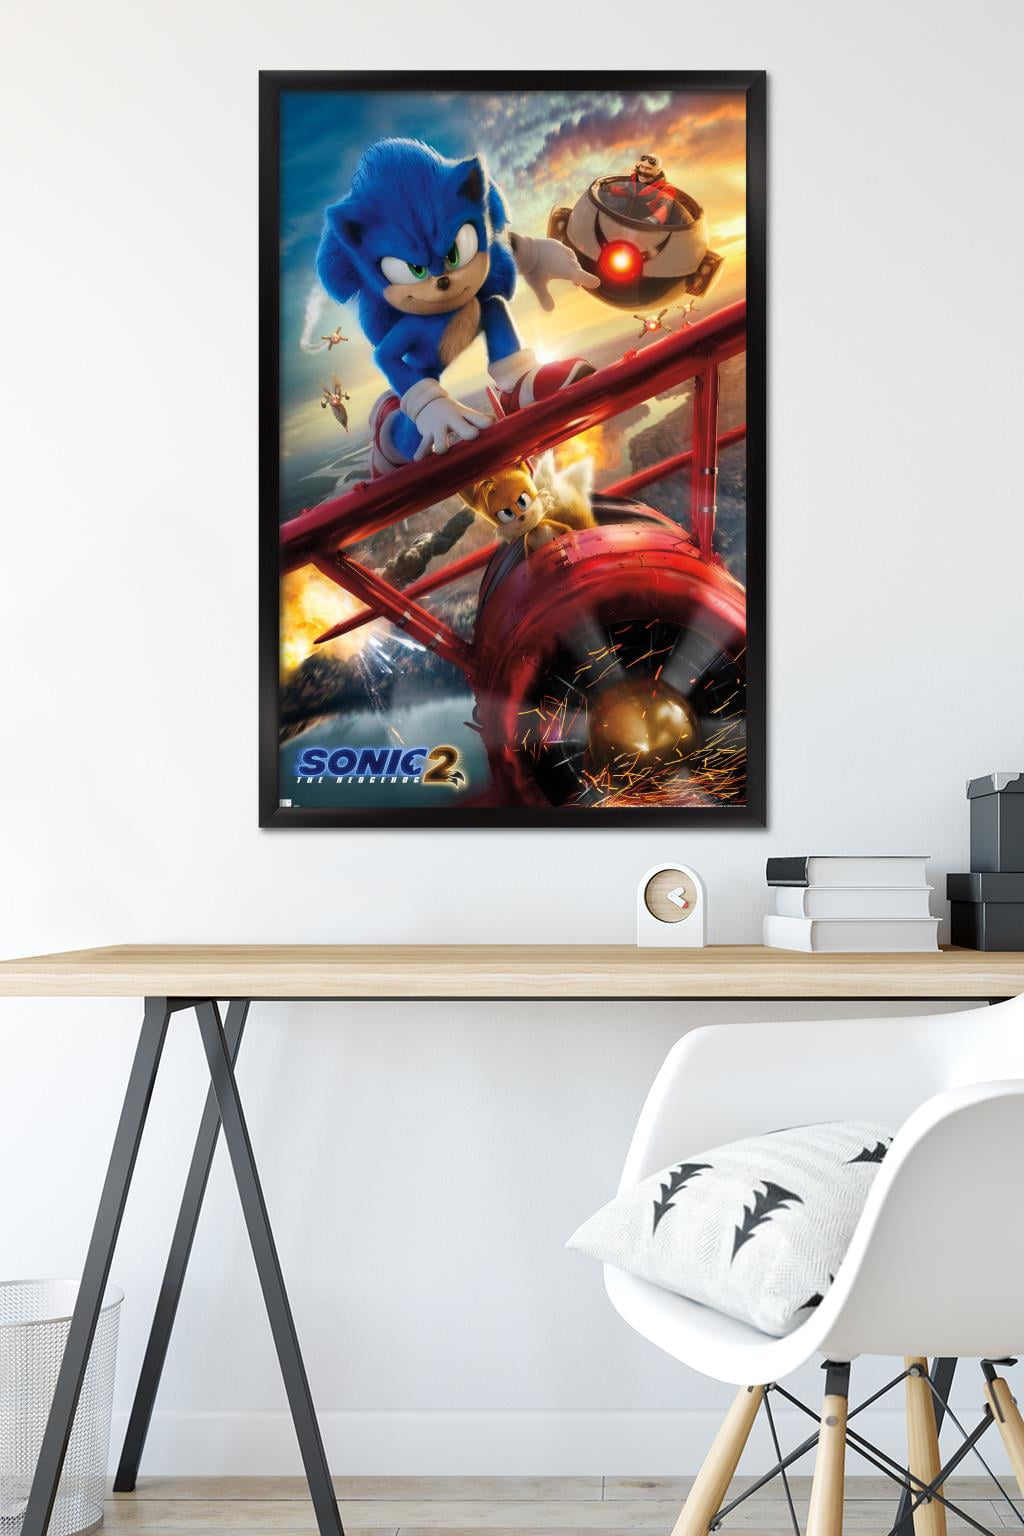 Sonic the Hedgehog 2 - Key Art Wall Poster, 22.375 x 34 